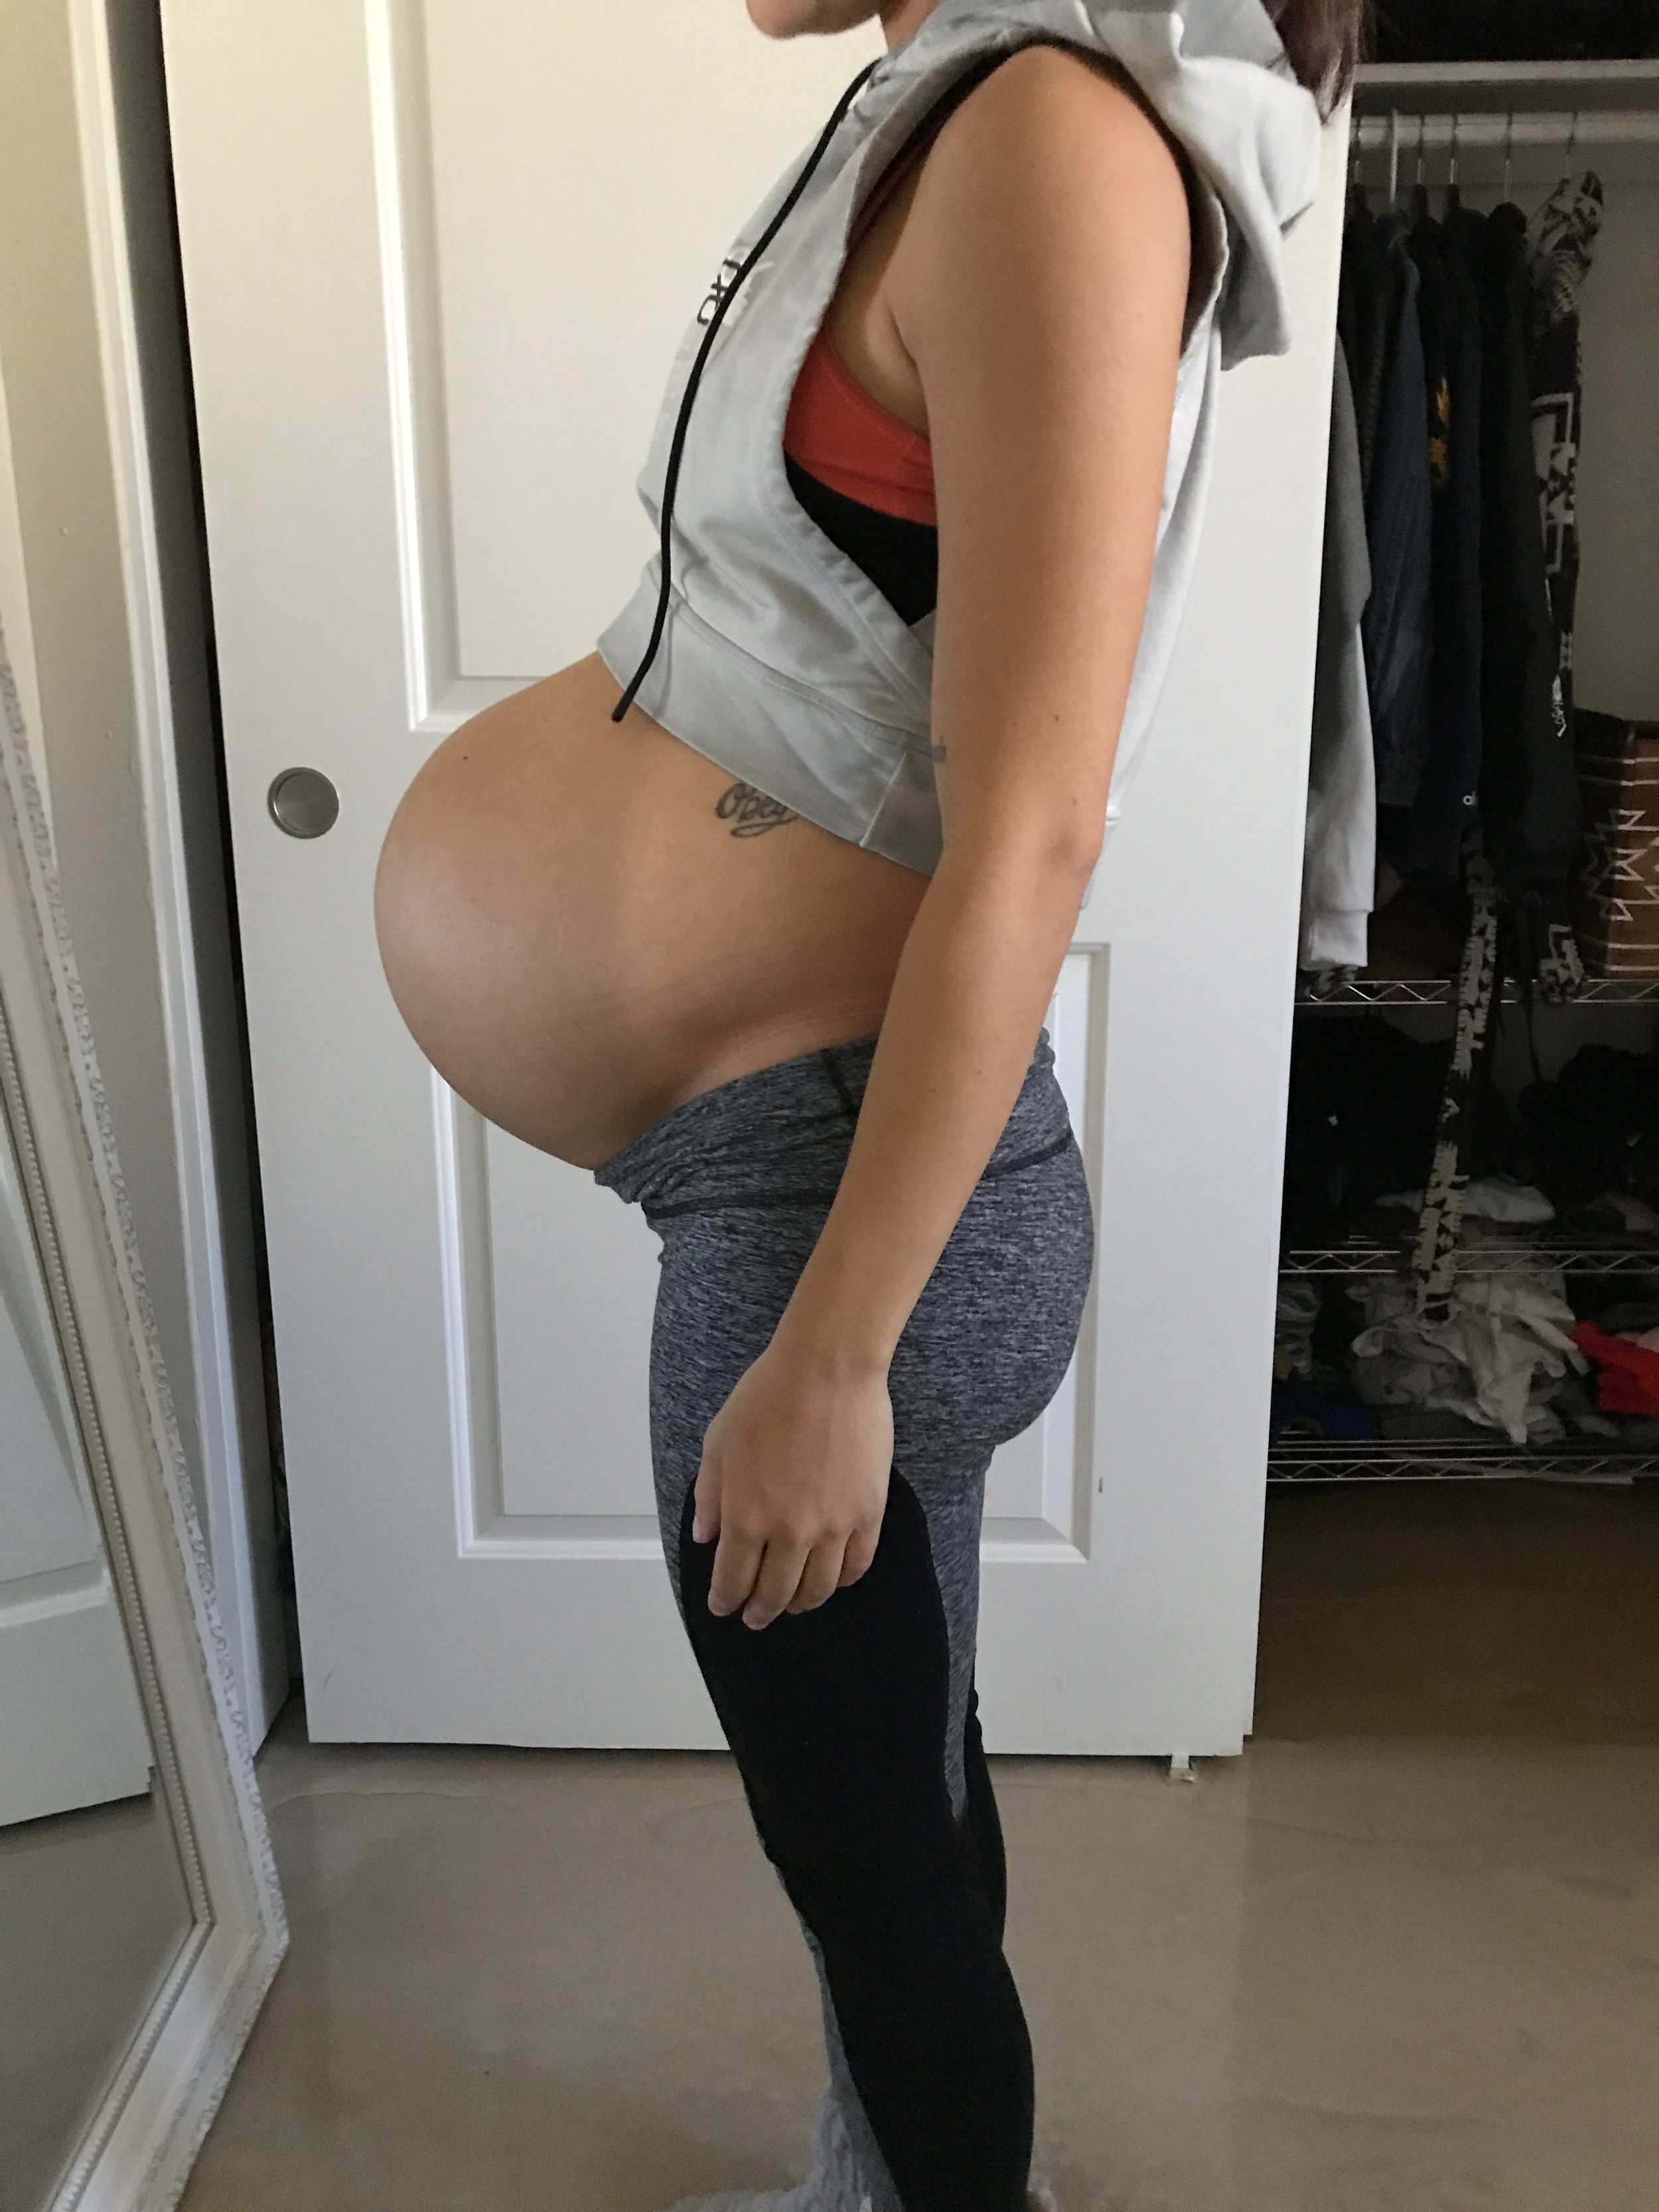  9.5 MONTHS PREGNANT  